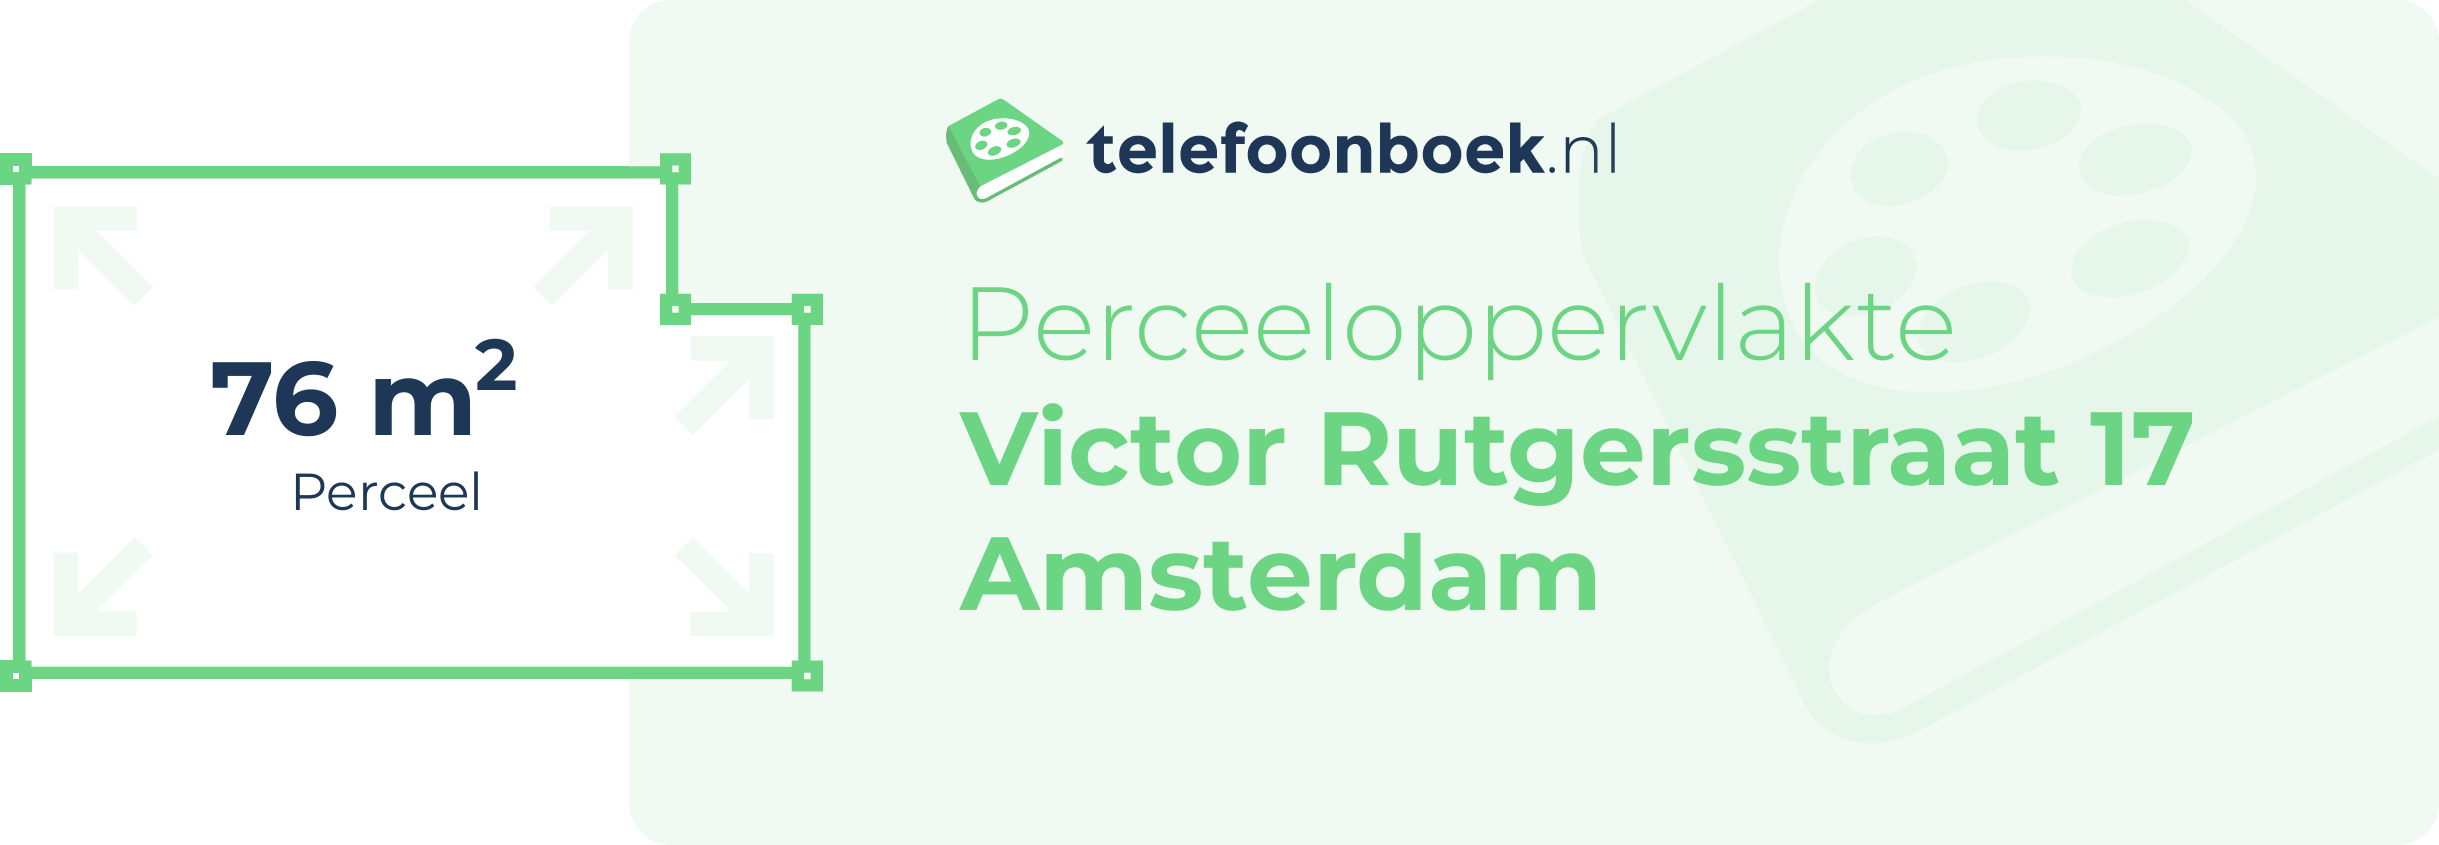 Perceeloppervlakte Victor Rutgersstraat 17 Amsterdam